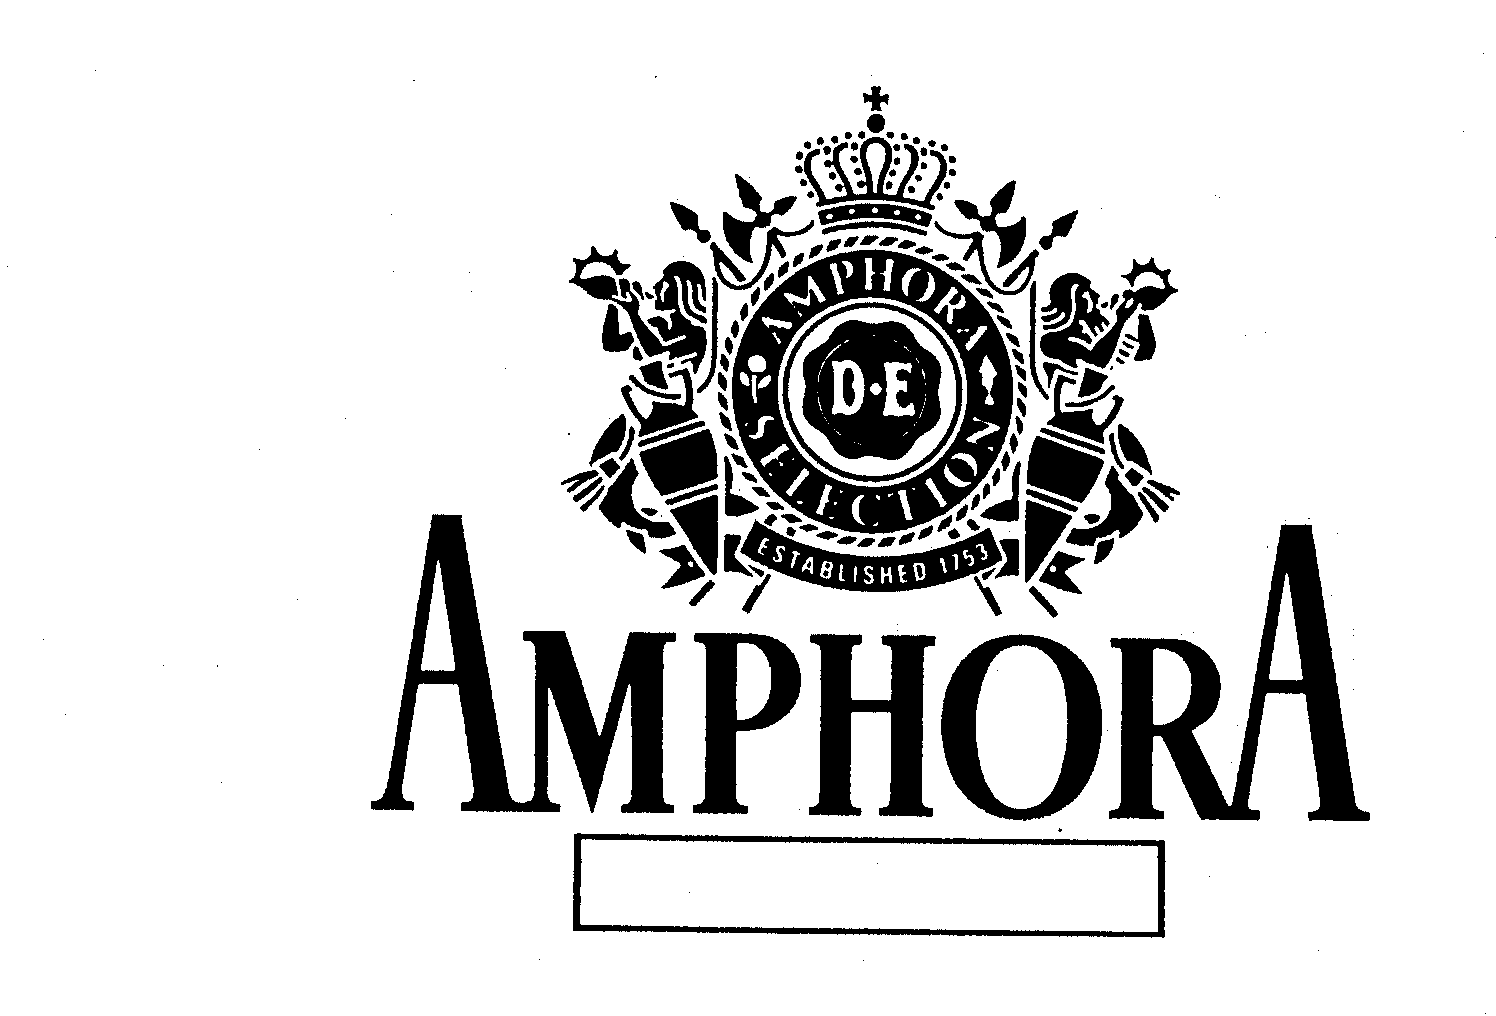  AMPHORA SELECTION ESTABLISHED 1753 DE AMPHORA